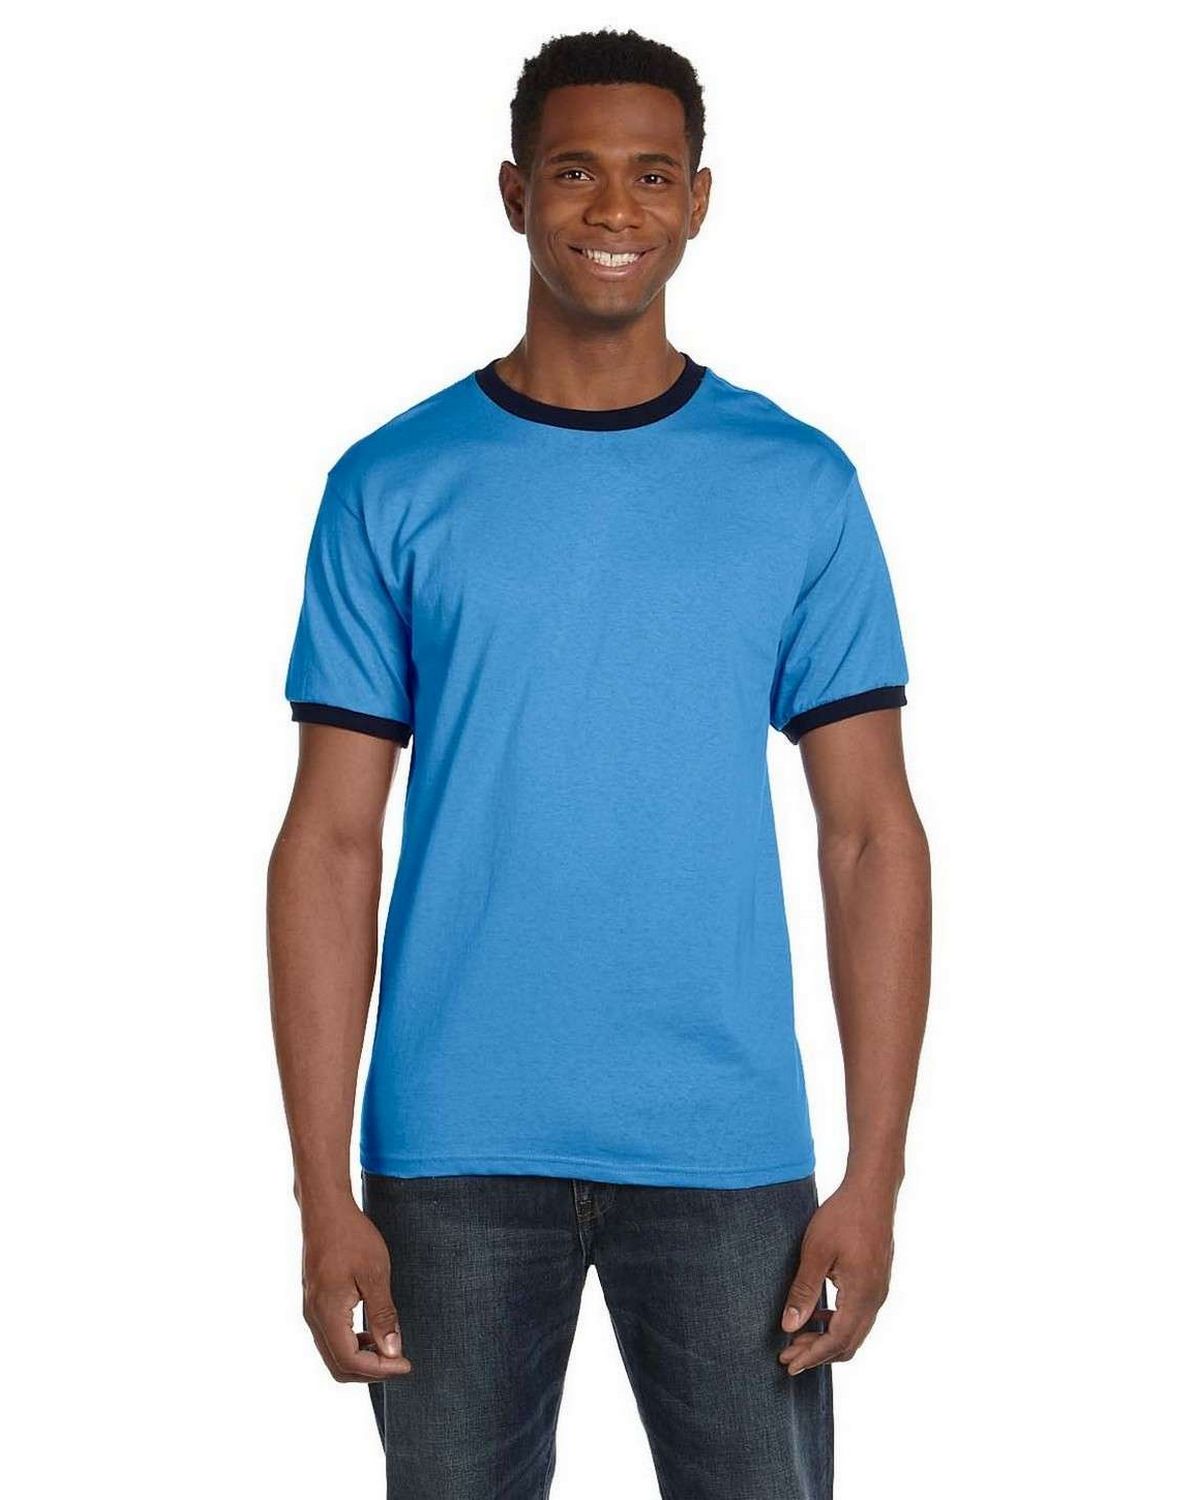 Anvil Mens Size S-3XL NEW 2 Tone Cotton Blend Ringer Contrast T-Shirt Team Sport 